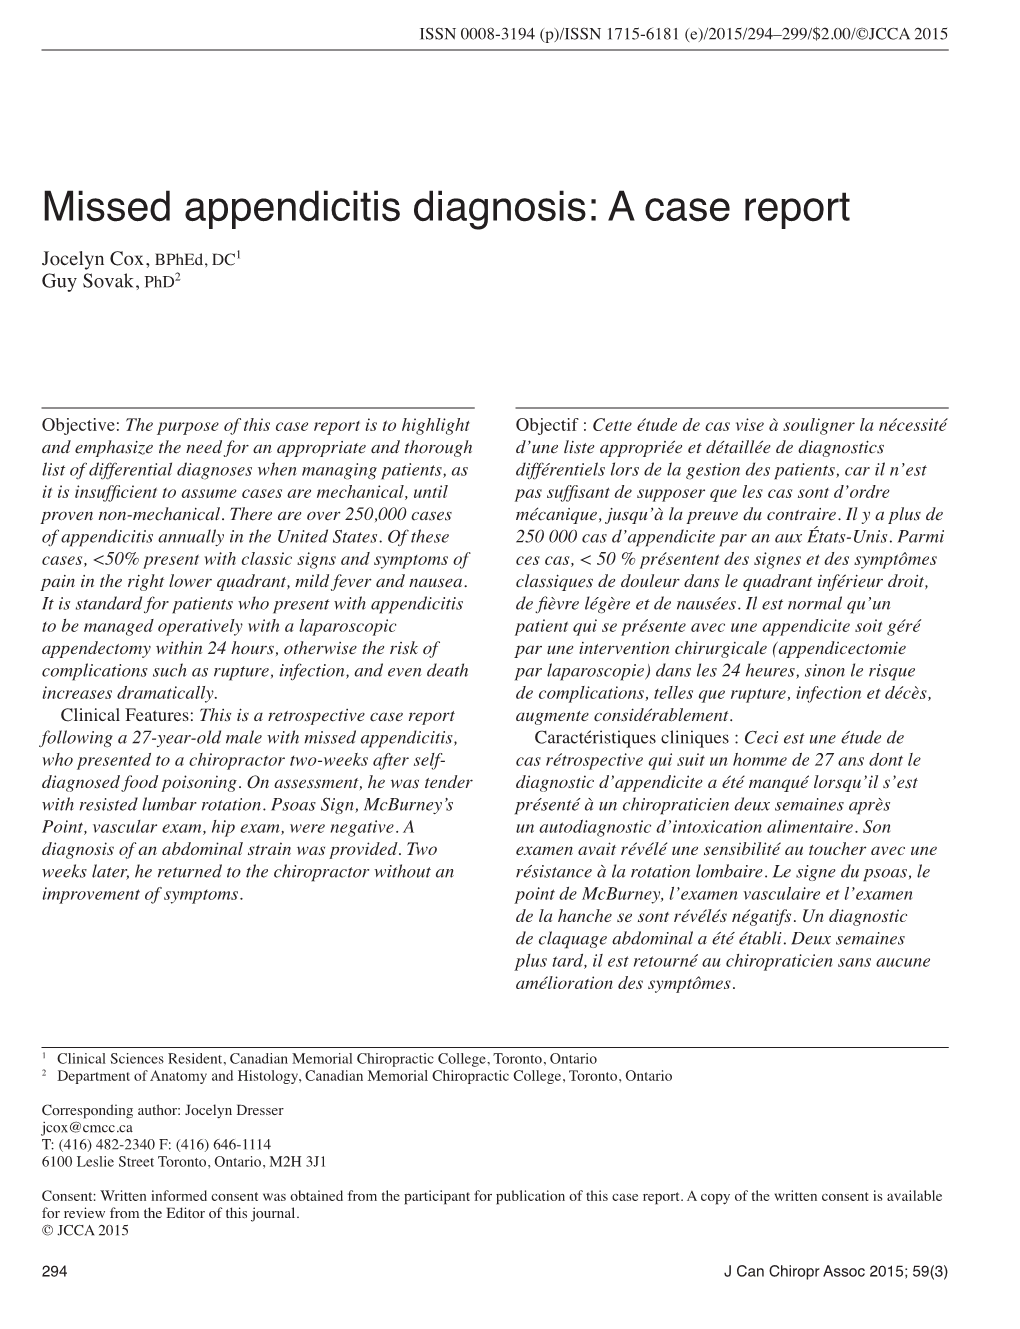 Missed Appendicitis Diagnosis: a Case Report Jocelyn Cox, Bphed, DC1 Guy Sovak, Phd2